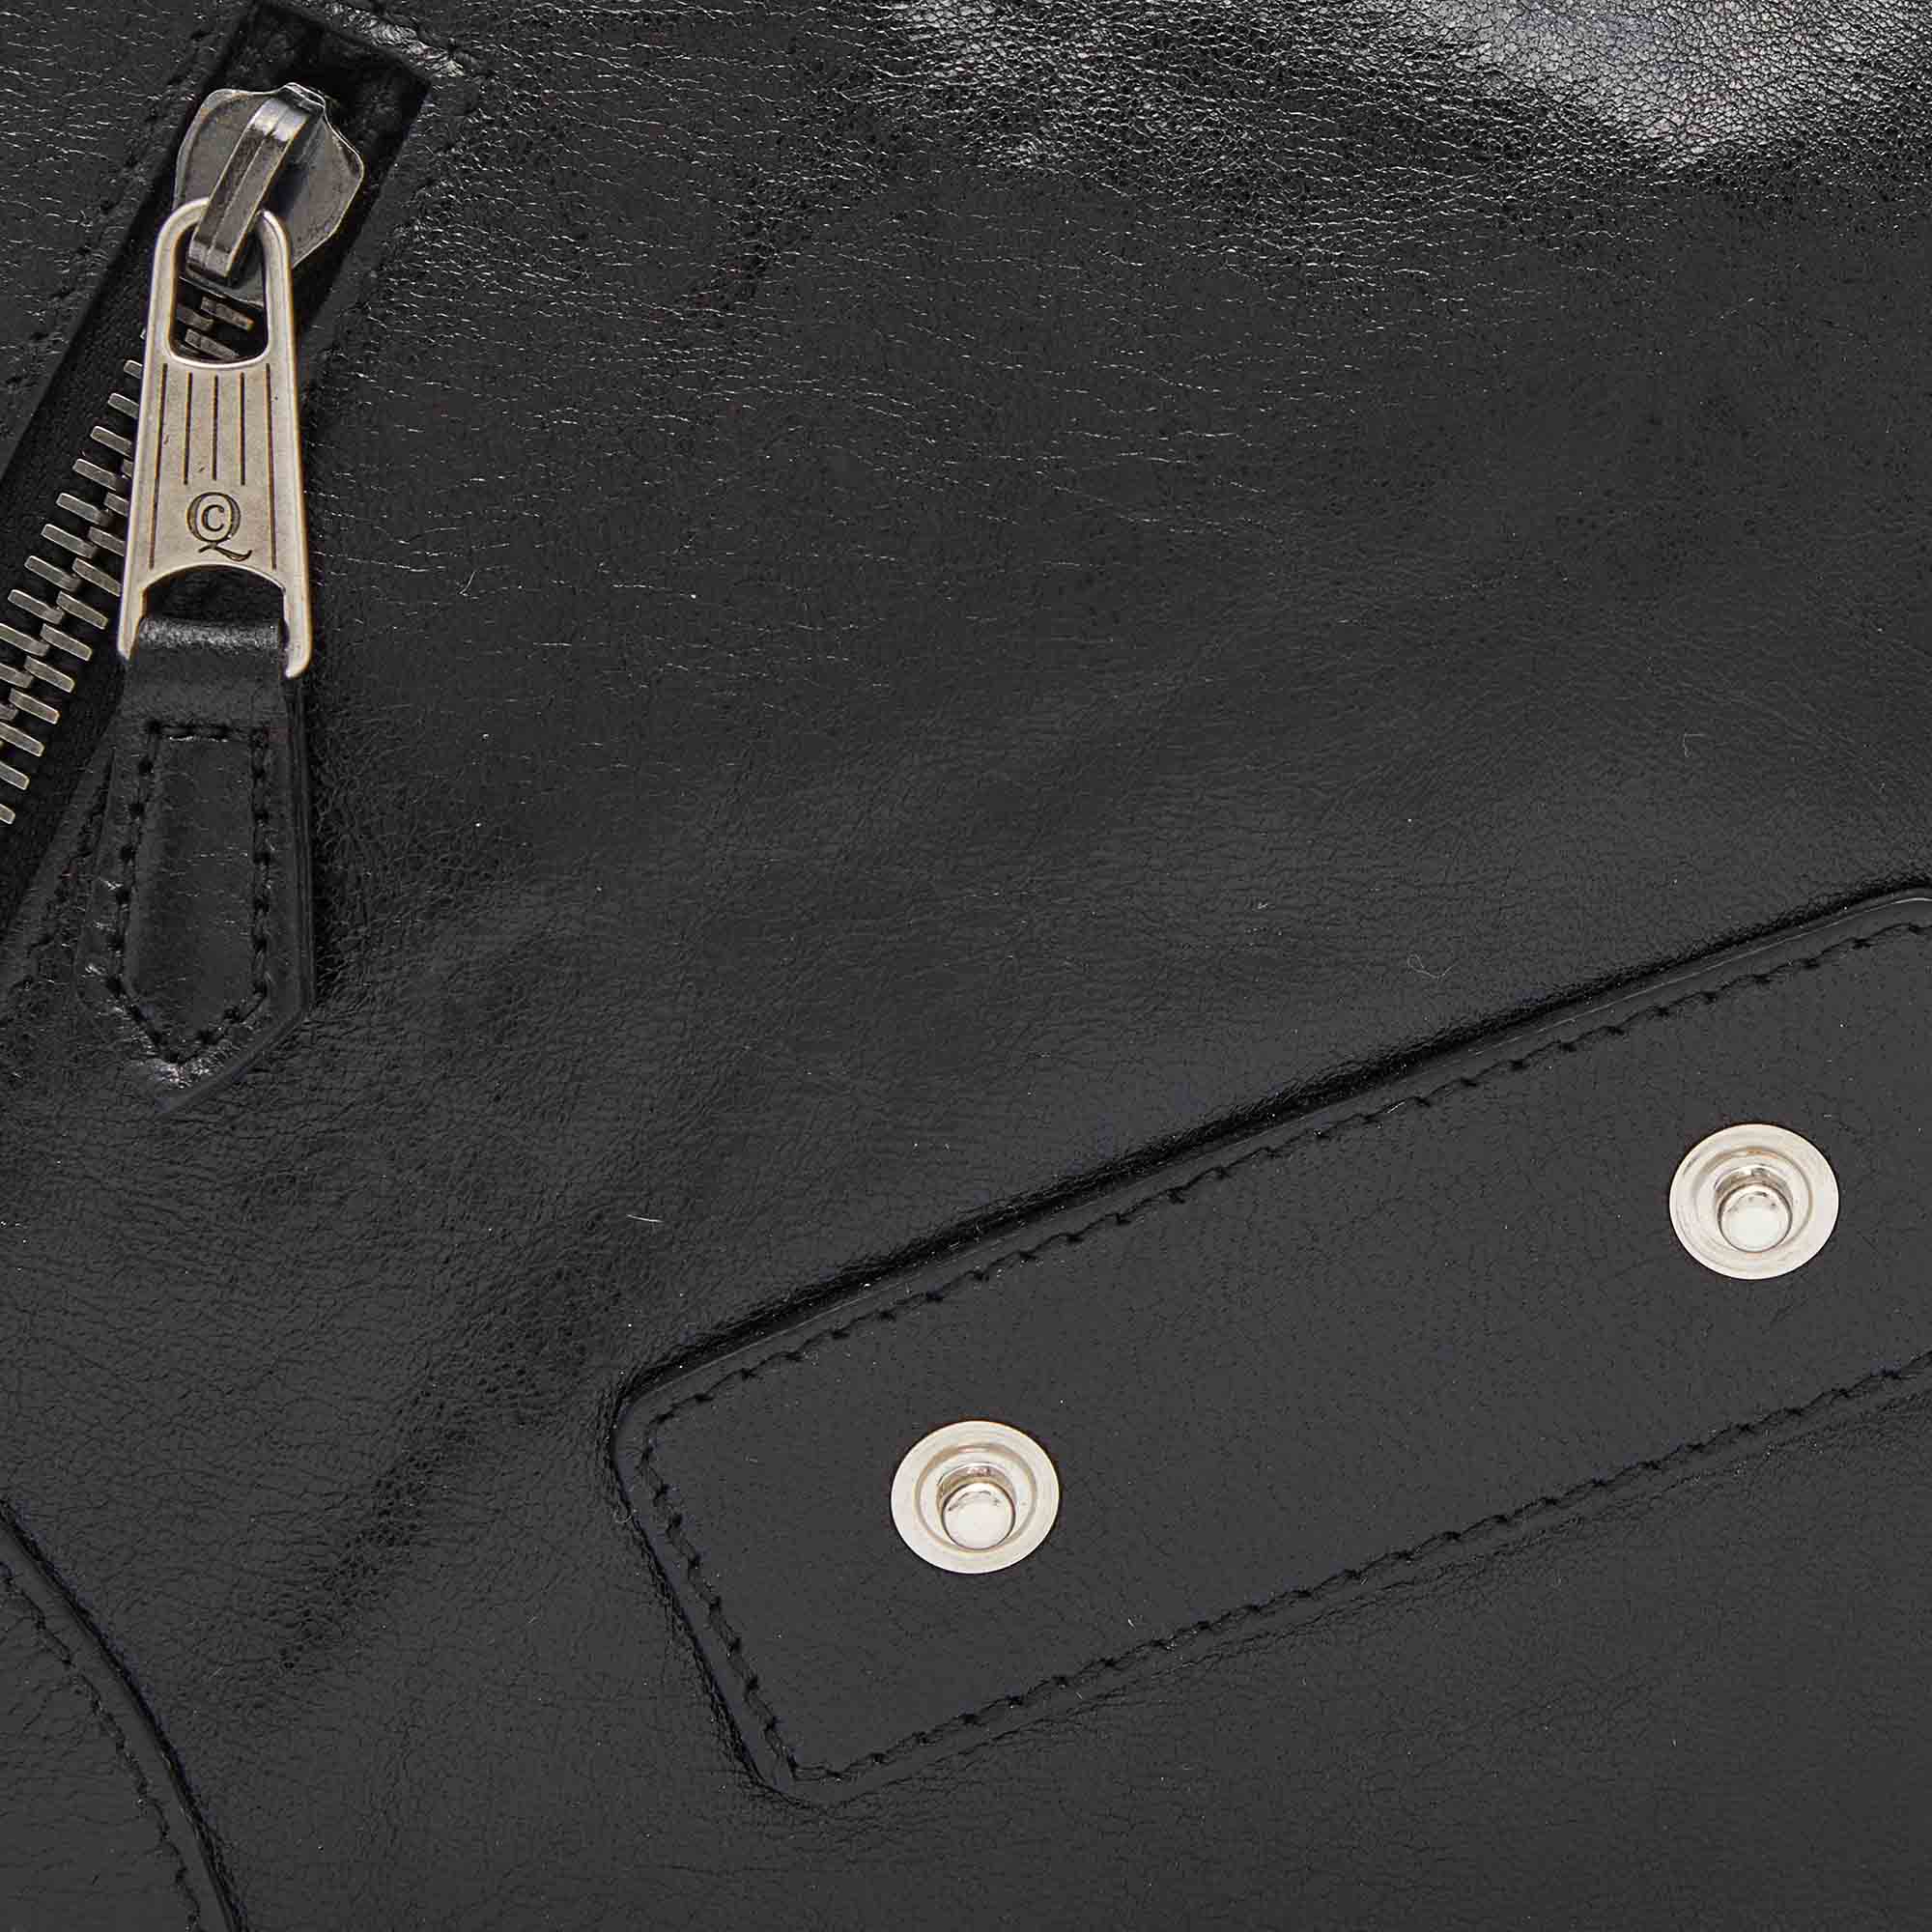 Alexander McQueen Black Leather Faithful Glove Clutch